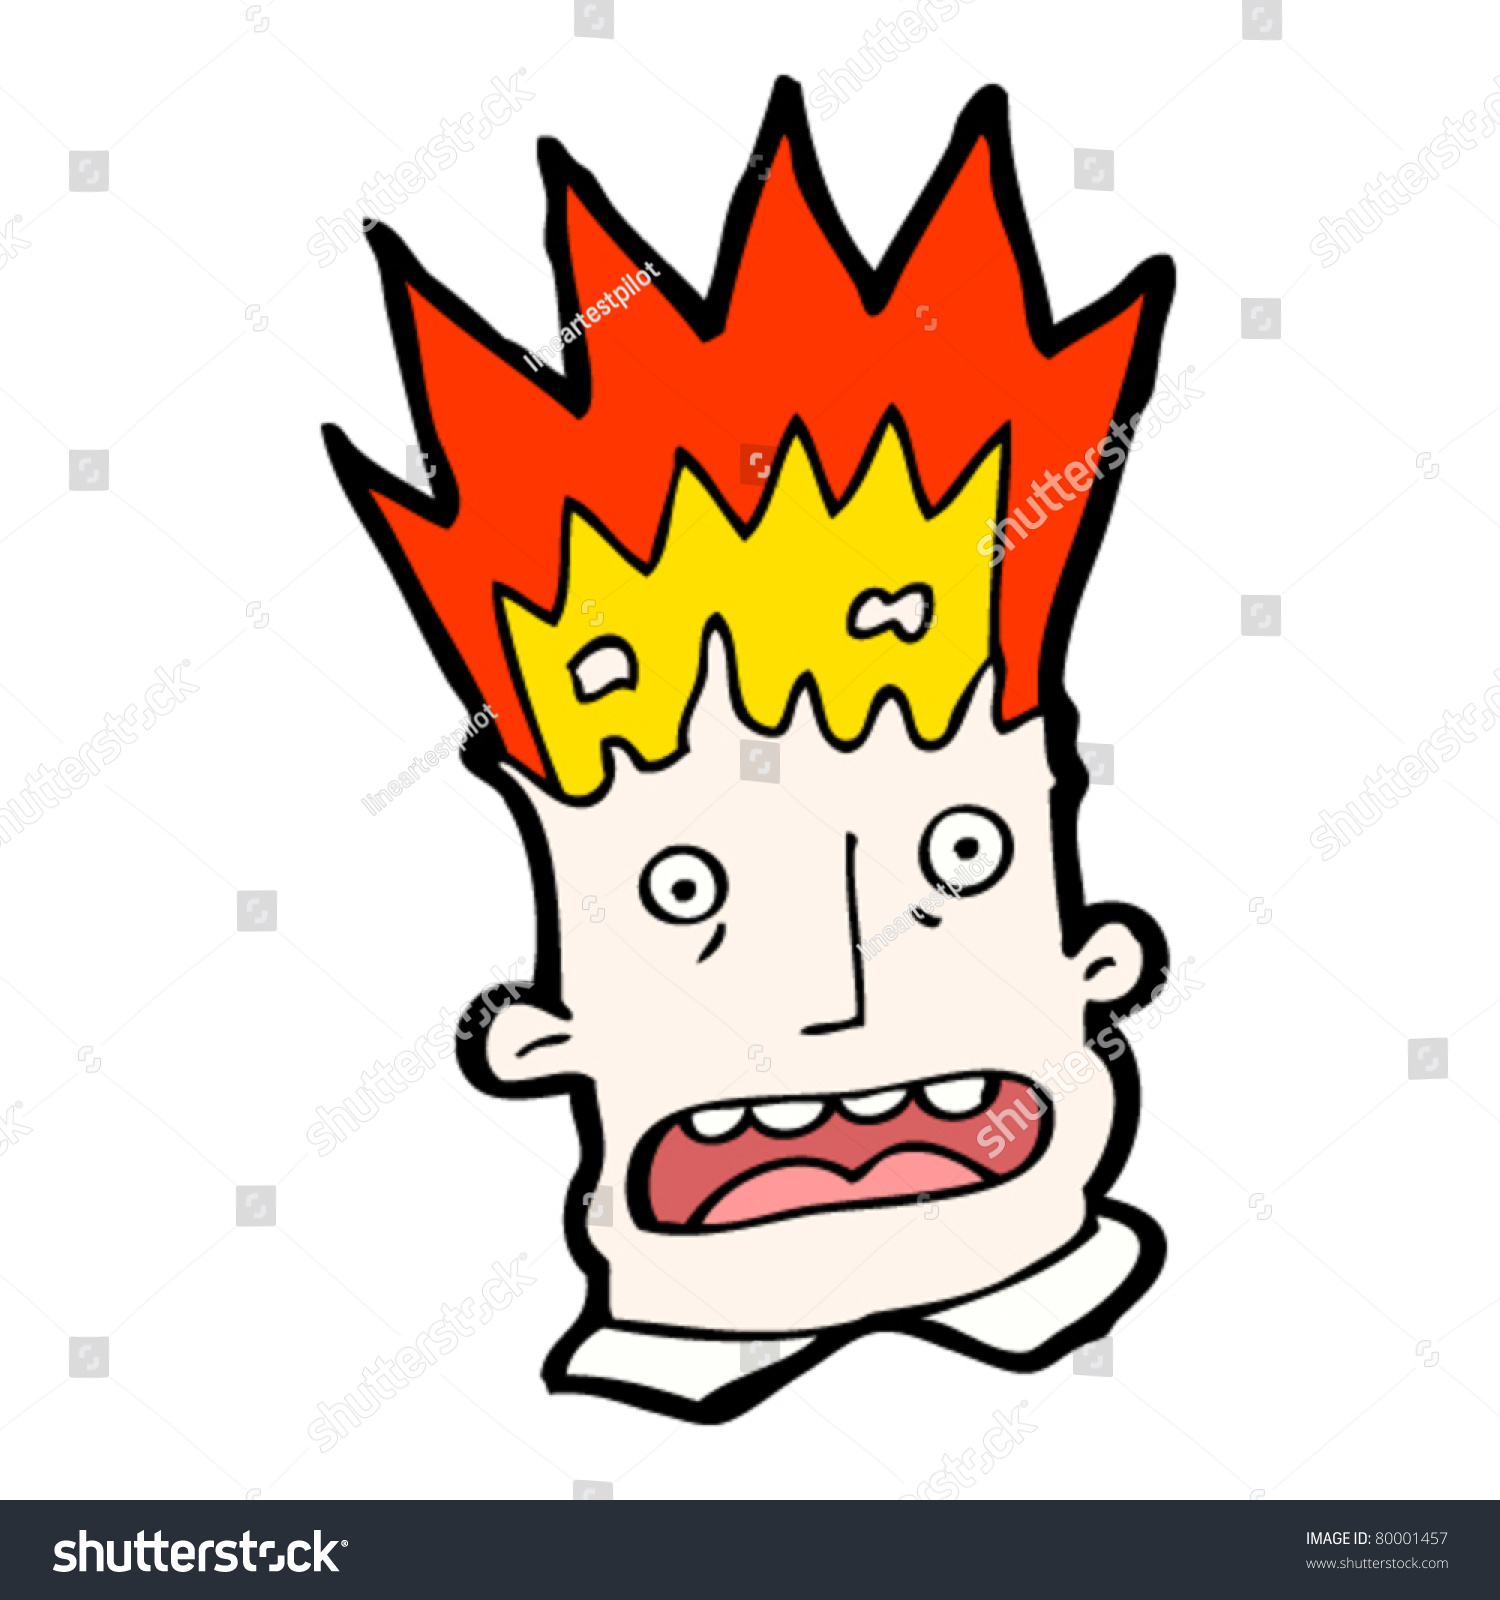 Exploding Head Cartoon Stock Vector 80001457 - Shutterstock